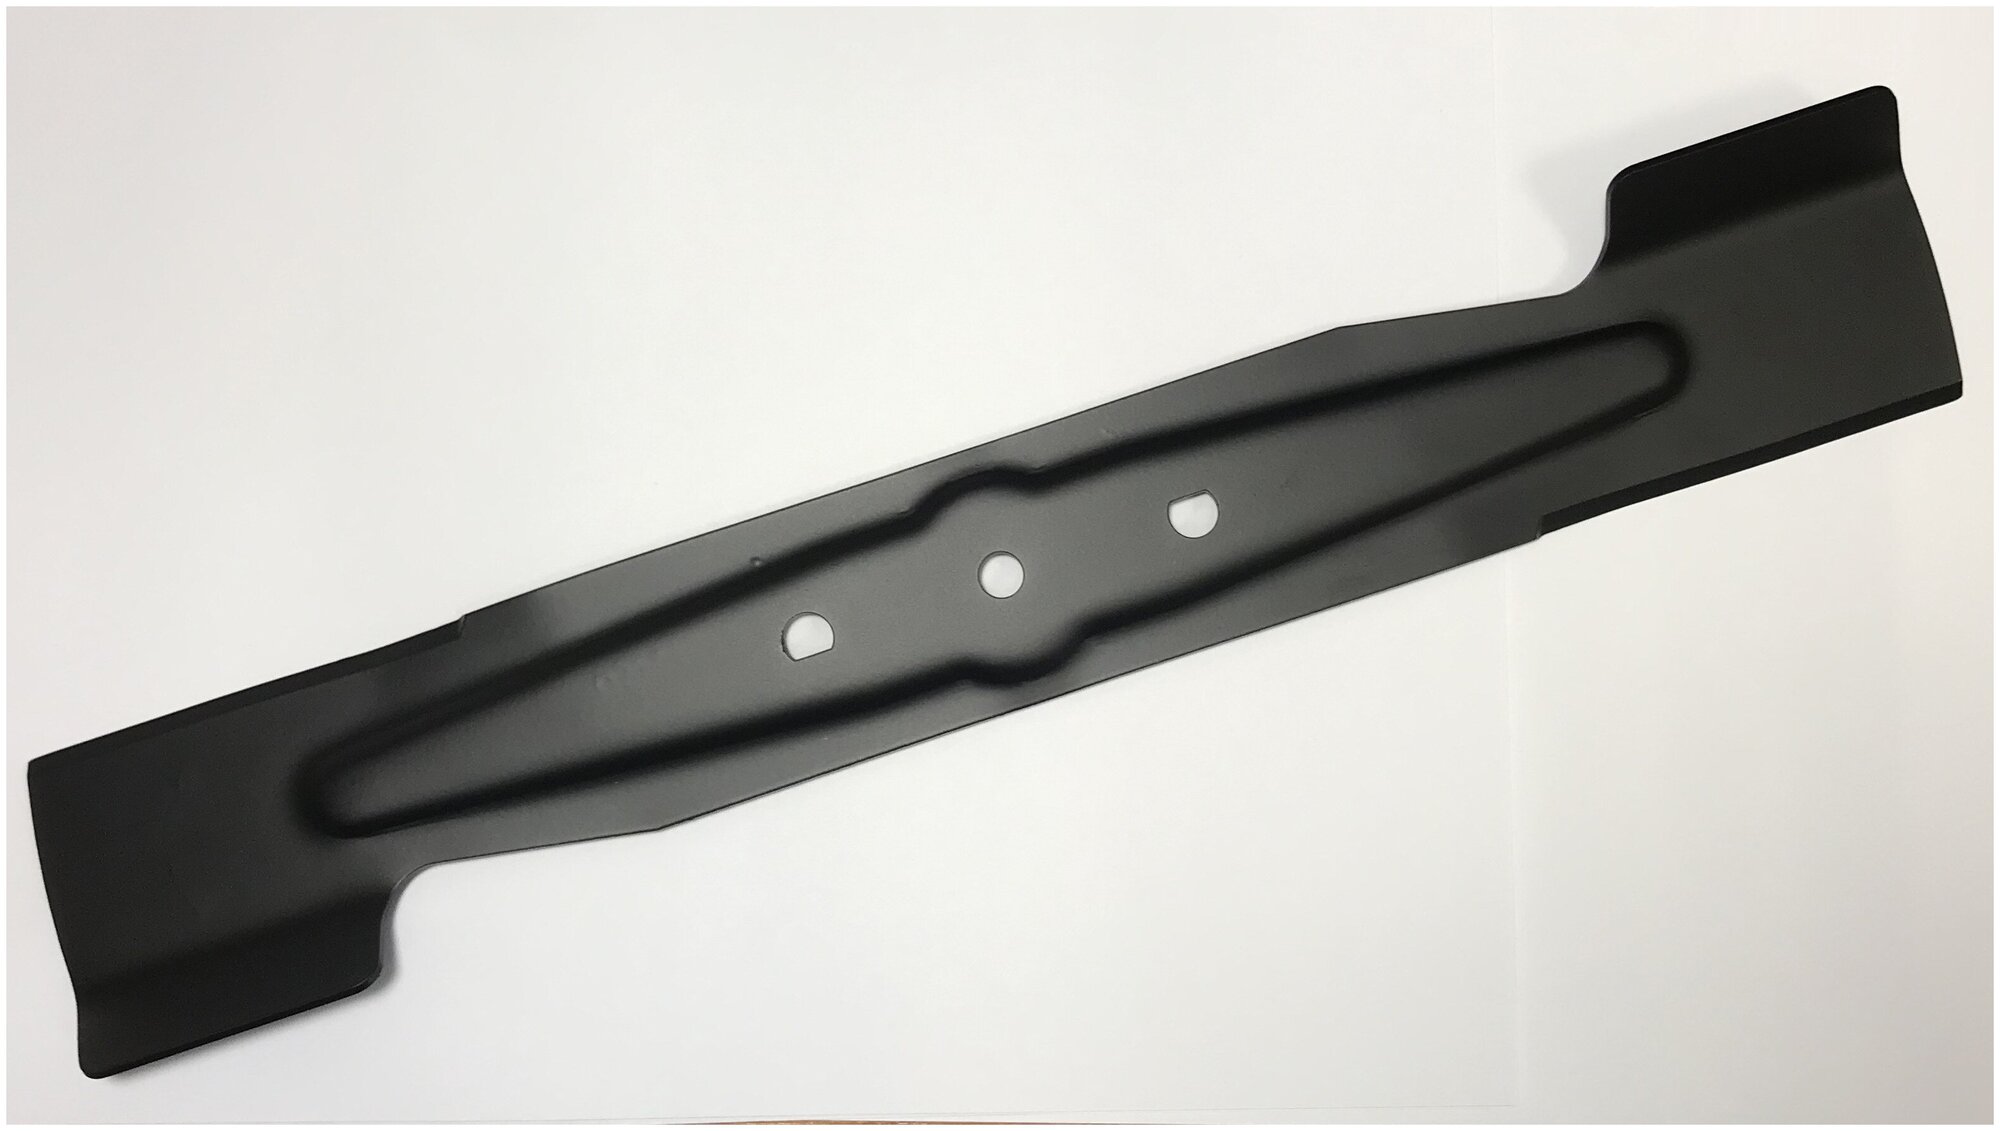 Нож для газонокосилки MAKITA ELM3720 (YA00000732)